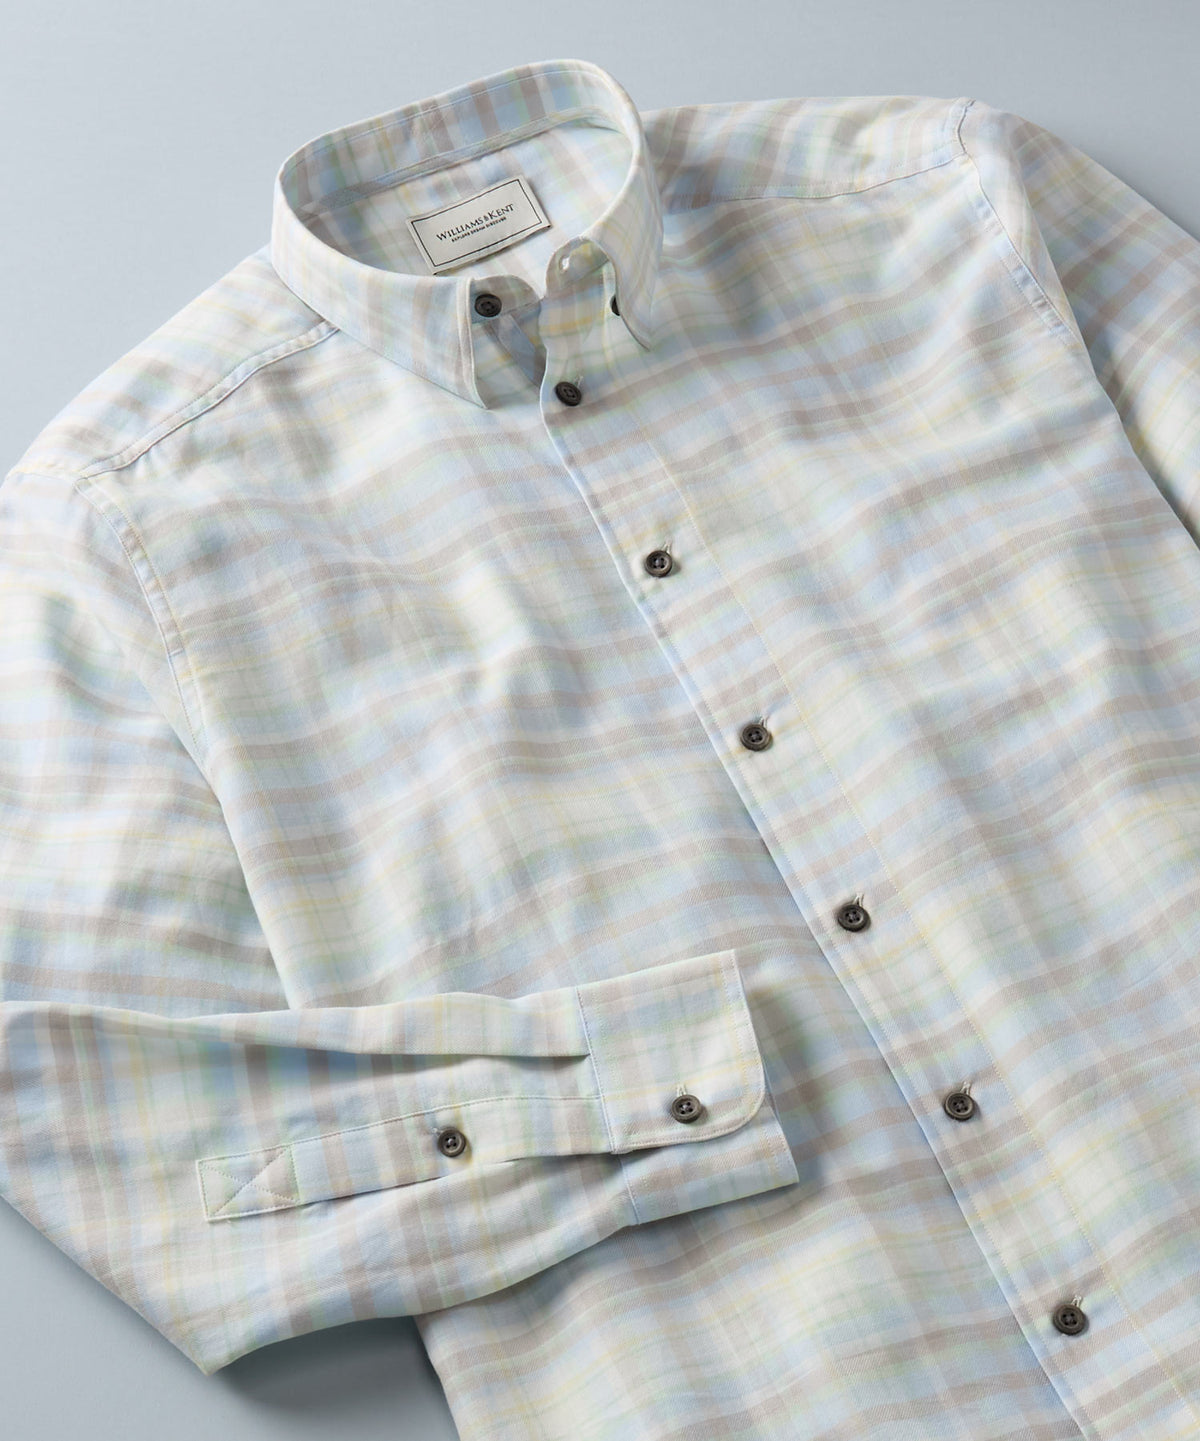 Soft Plaid Long-Sleeve Sport Shirt